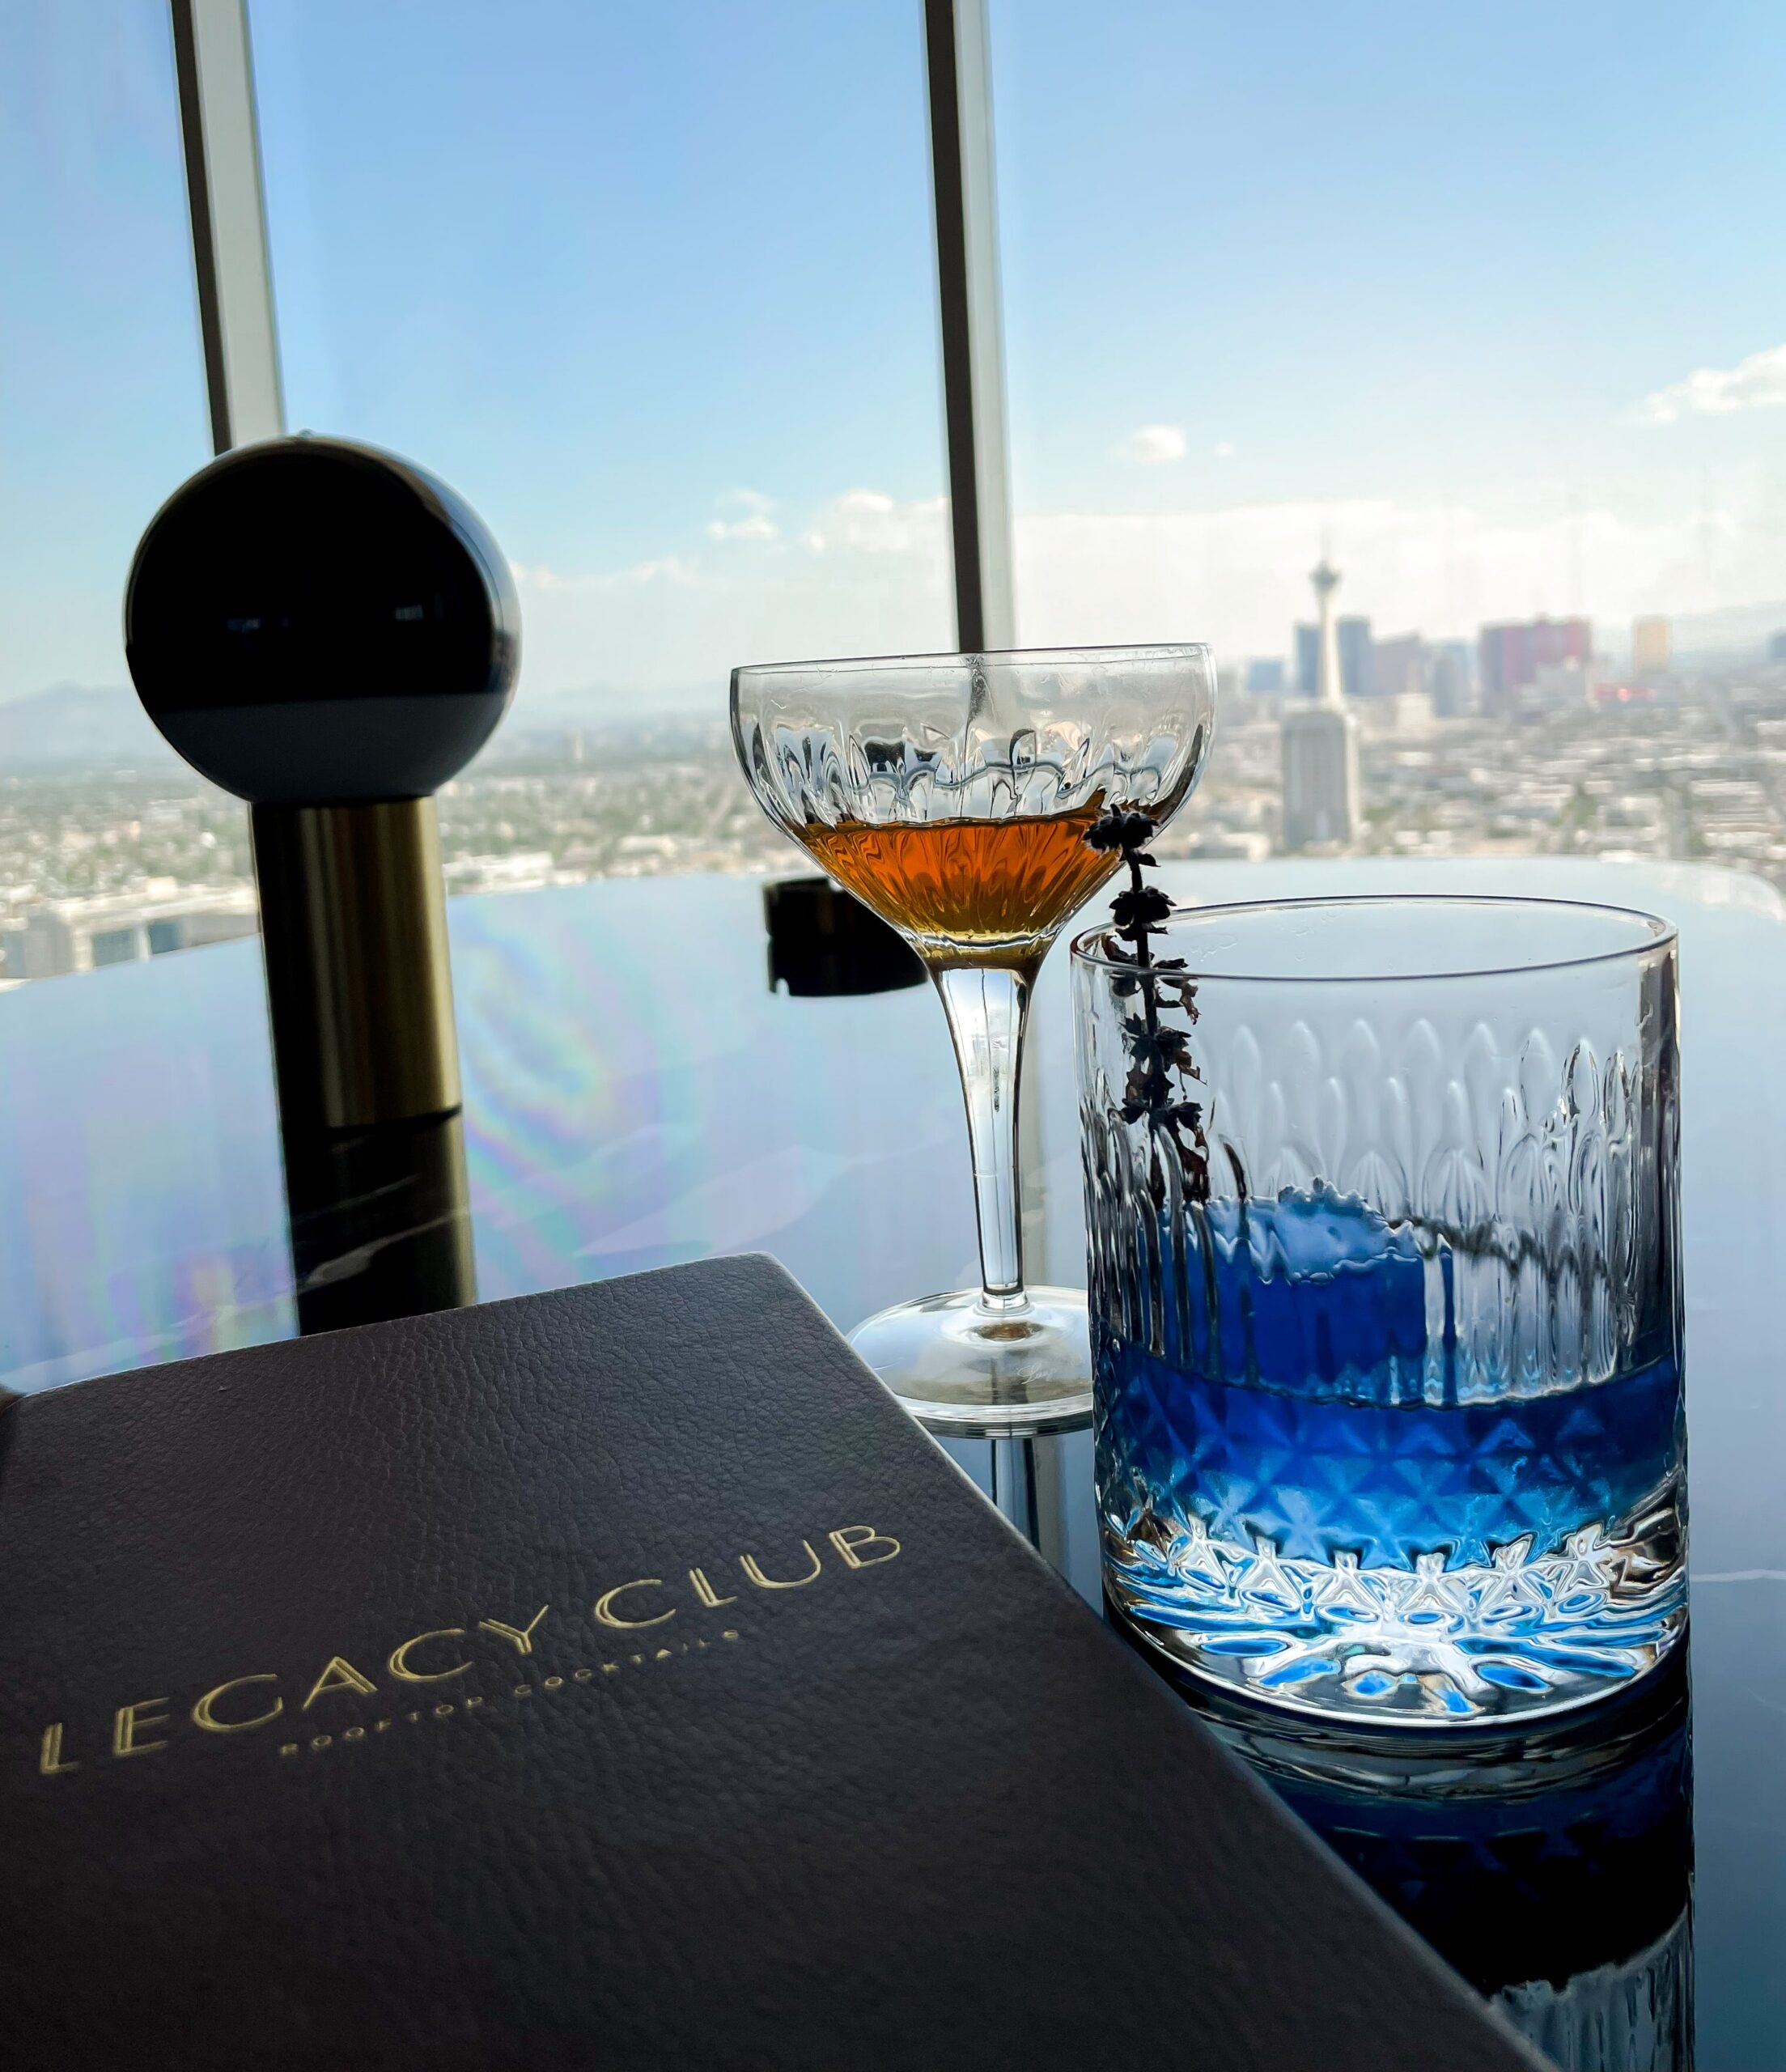 Legacy Club menu and drinks